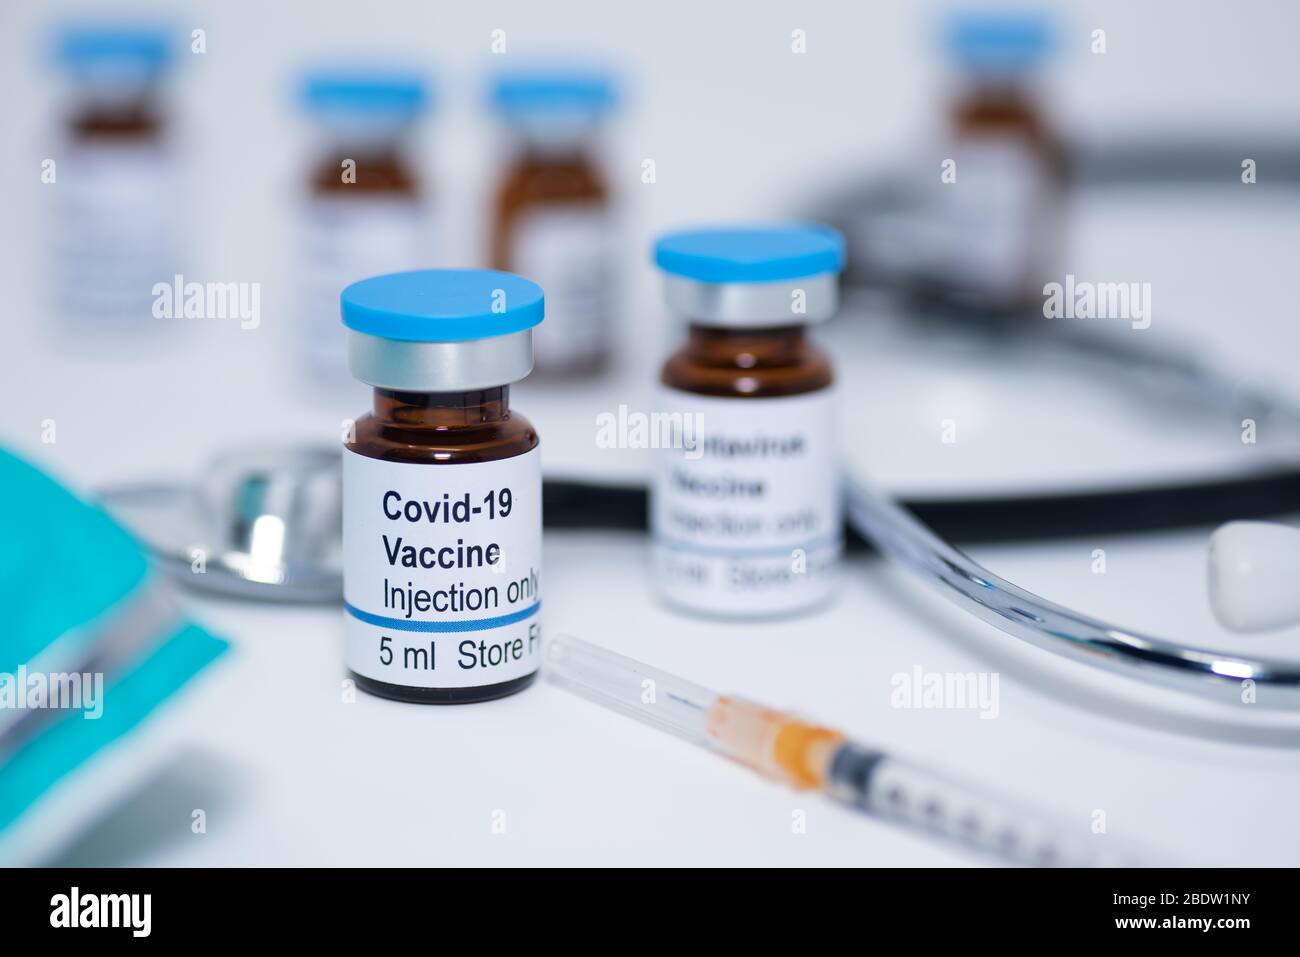 Novel coronavirus covid-19 vaccine vial under clinical trial Stock Photo